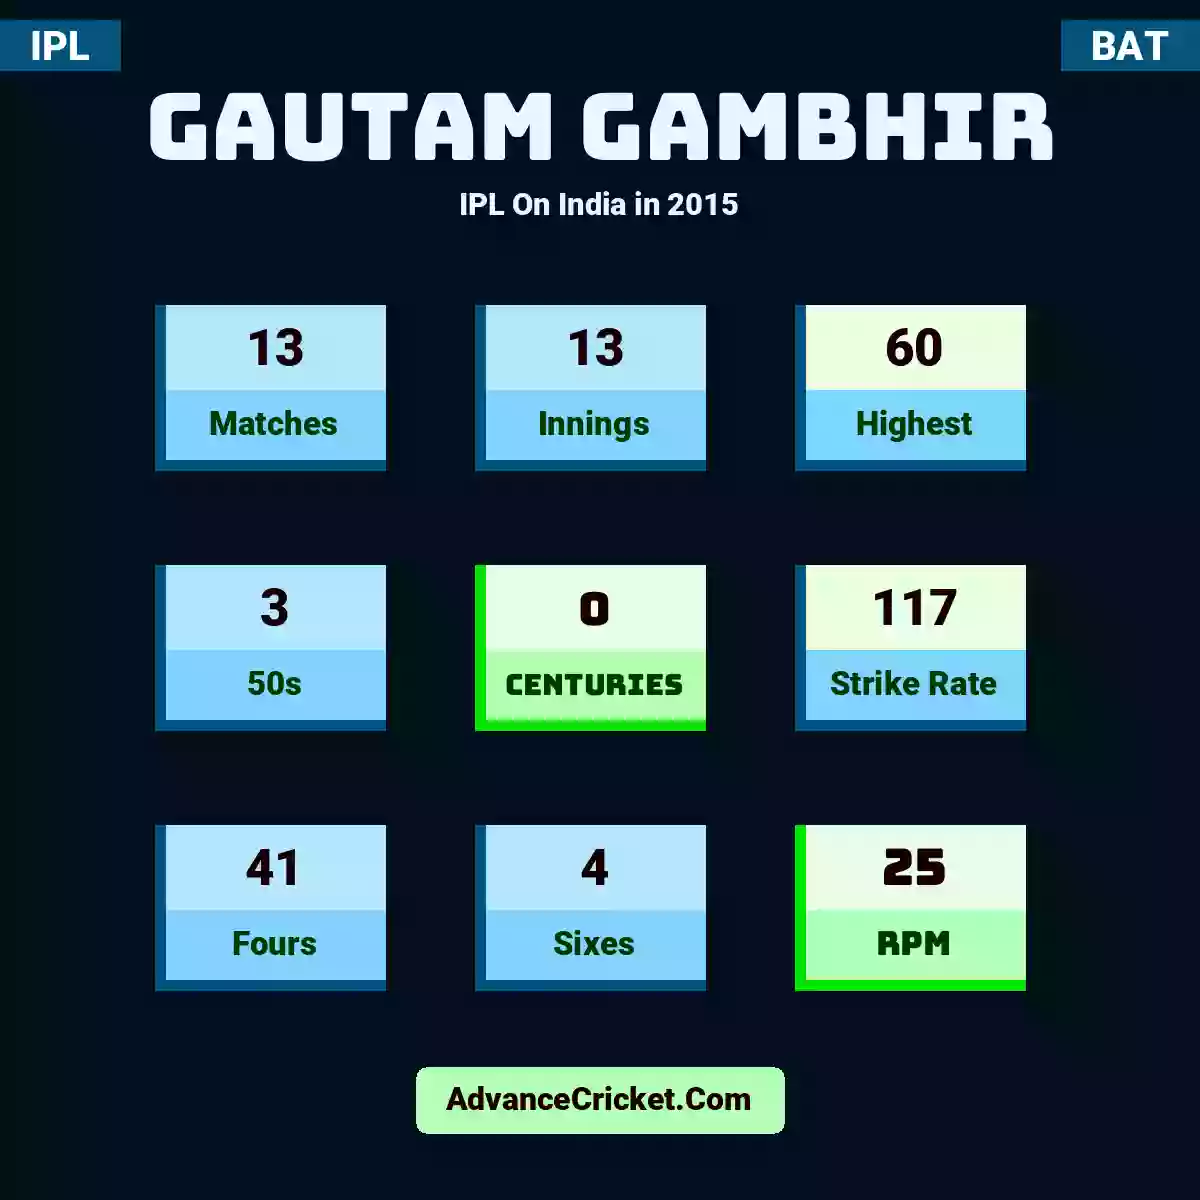 Gautam Gambhir IPL  On India in 2015, Gautam Gambhir played 13 matches, scored 60 runs as highest, 3 half-centuries, and 0 centuries, with a strike rate of 117. G.Gambhir hit 41 fours and 4 sixes, with an RPM of 25.